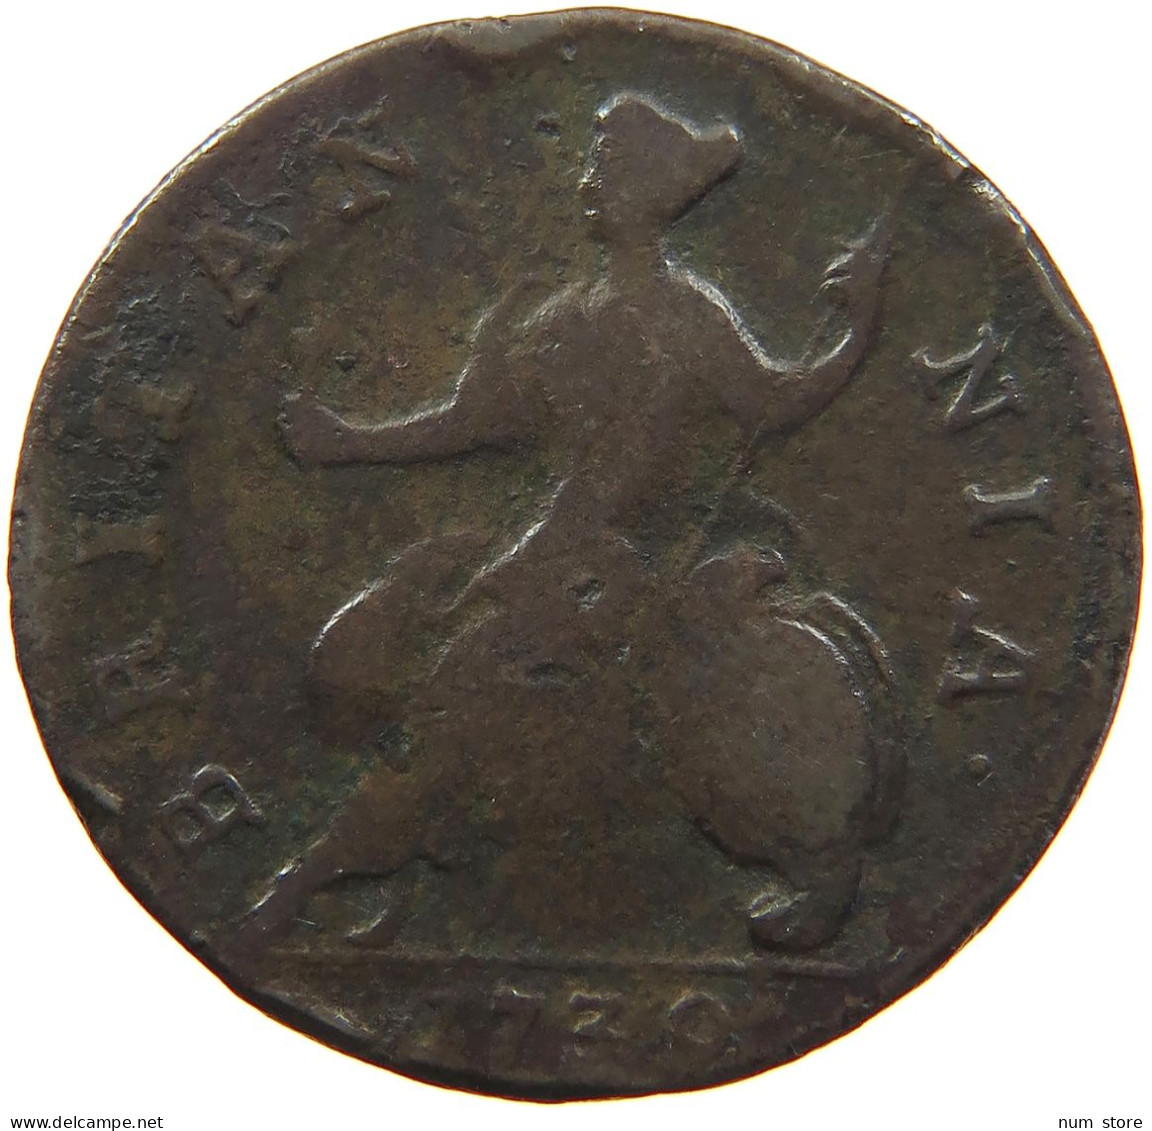 GREAT BRITAIN HALFPENNY 1739 George II. 1727-1760. #t021 0253 - B. 1/2 Penny